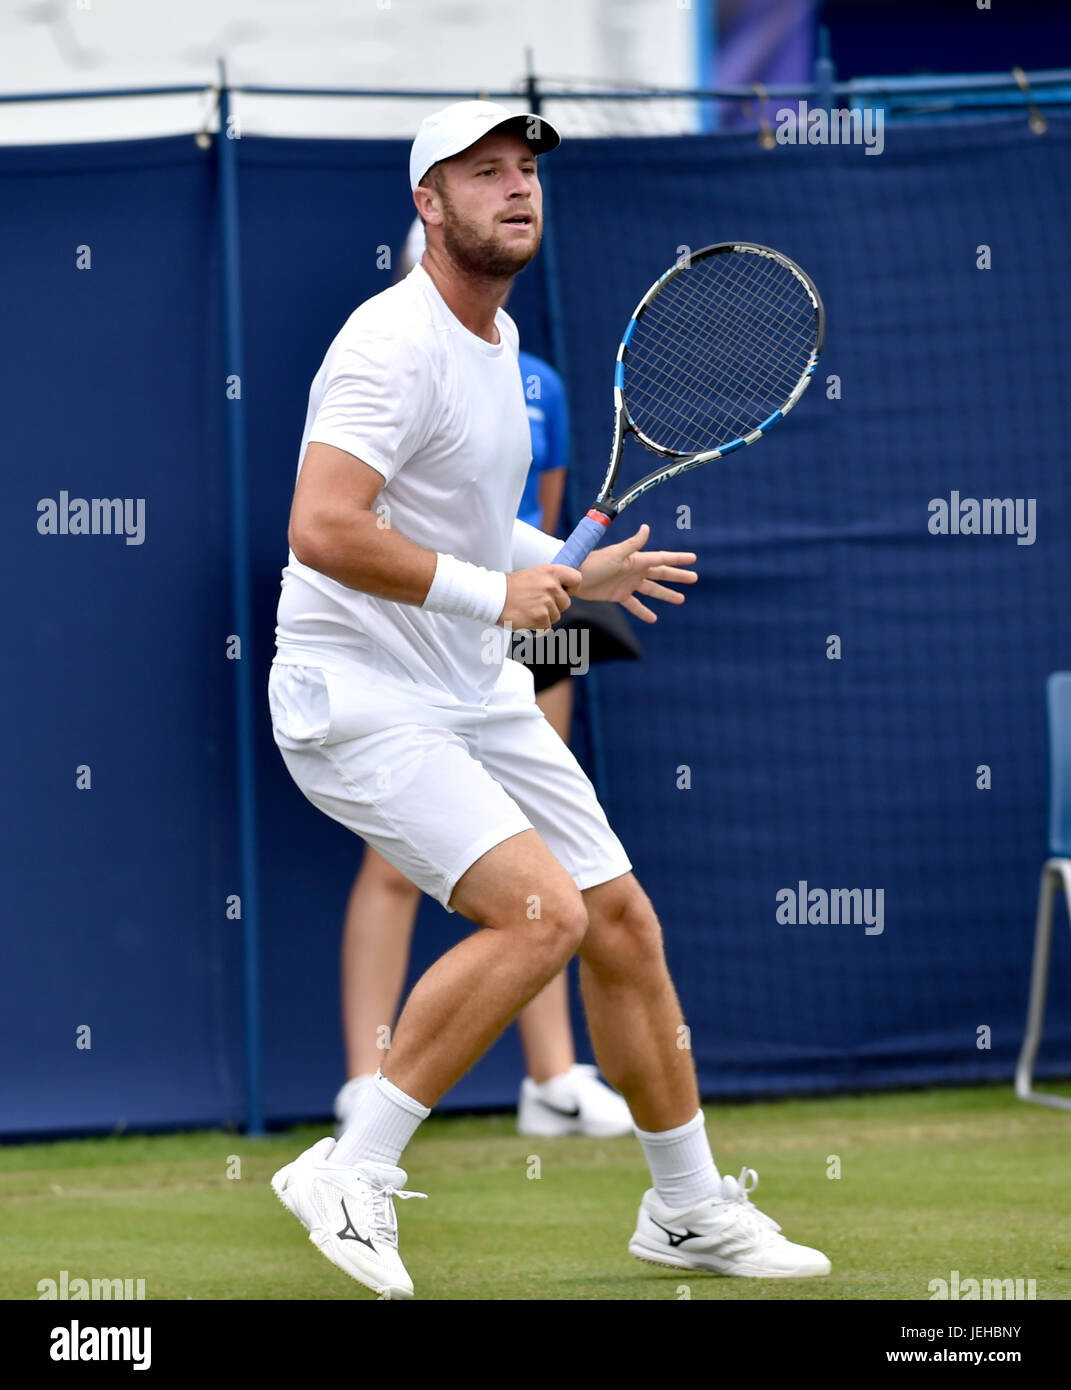 Lucas Bambridge de Gran Bretaña durante el torneo de tenis Aegon International de Eastbourne en Devonshire Park en Eastbourne East Sussex, Reino Unido. 25 Jun 2017 Foto de stock